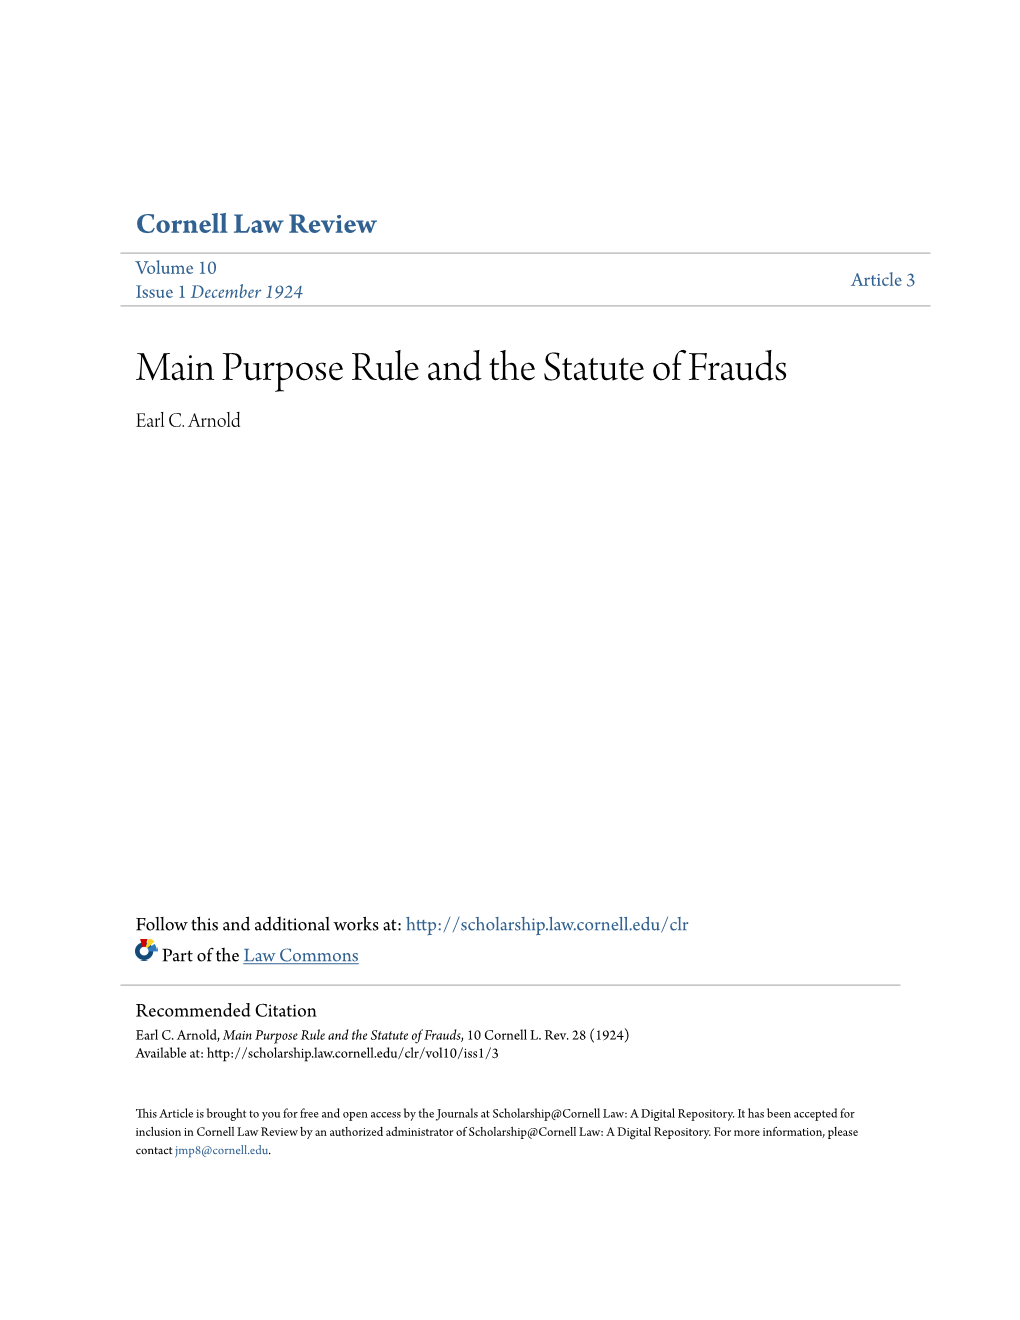 Main Purpose Rule and the Statute of Frauds Earl C